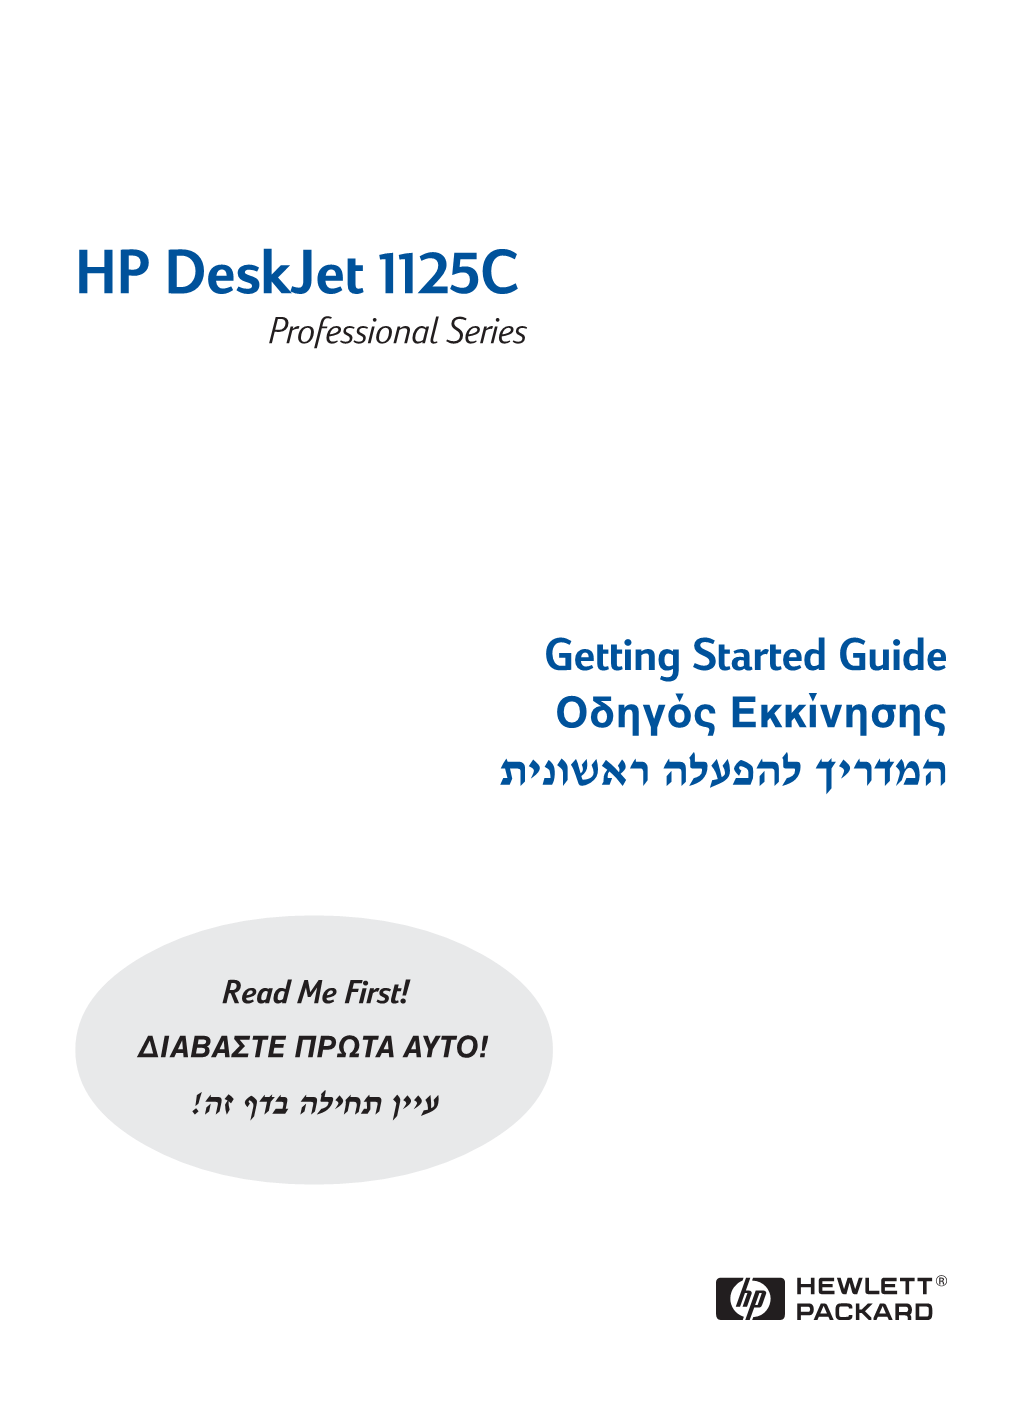 HP Deskjet 1125C Professional Series